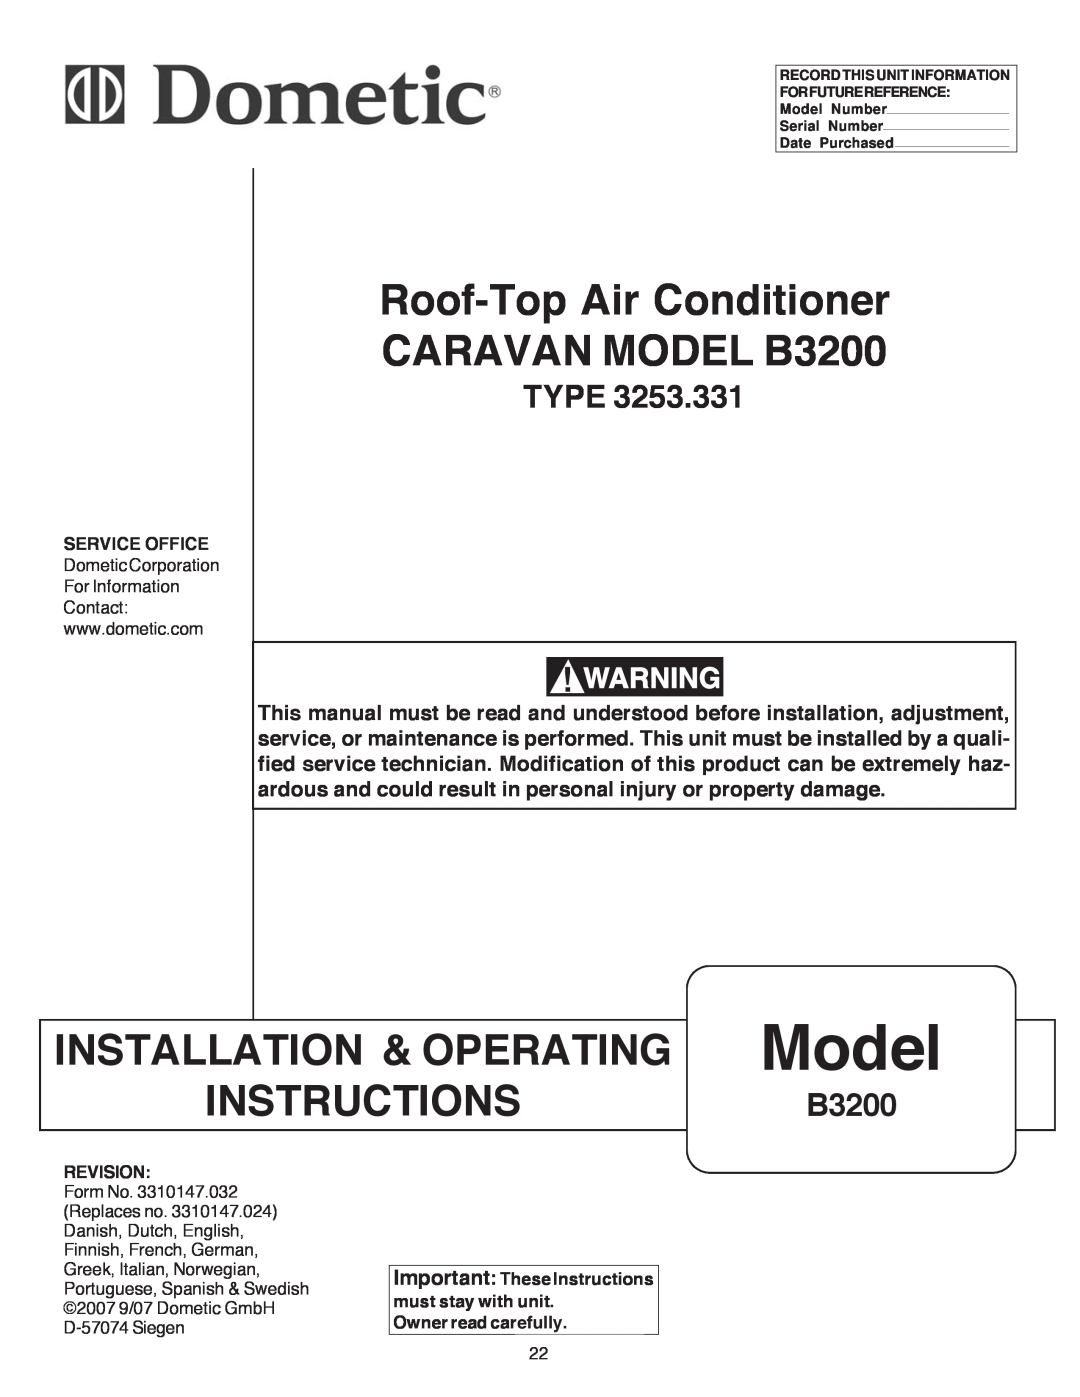 Dometic manual Model, Roof-TopAir Conditioner CARAVAN MODEL B3200, Installation & Operating, Instructions, Type 